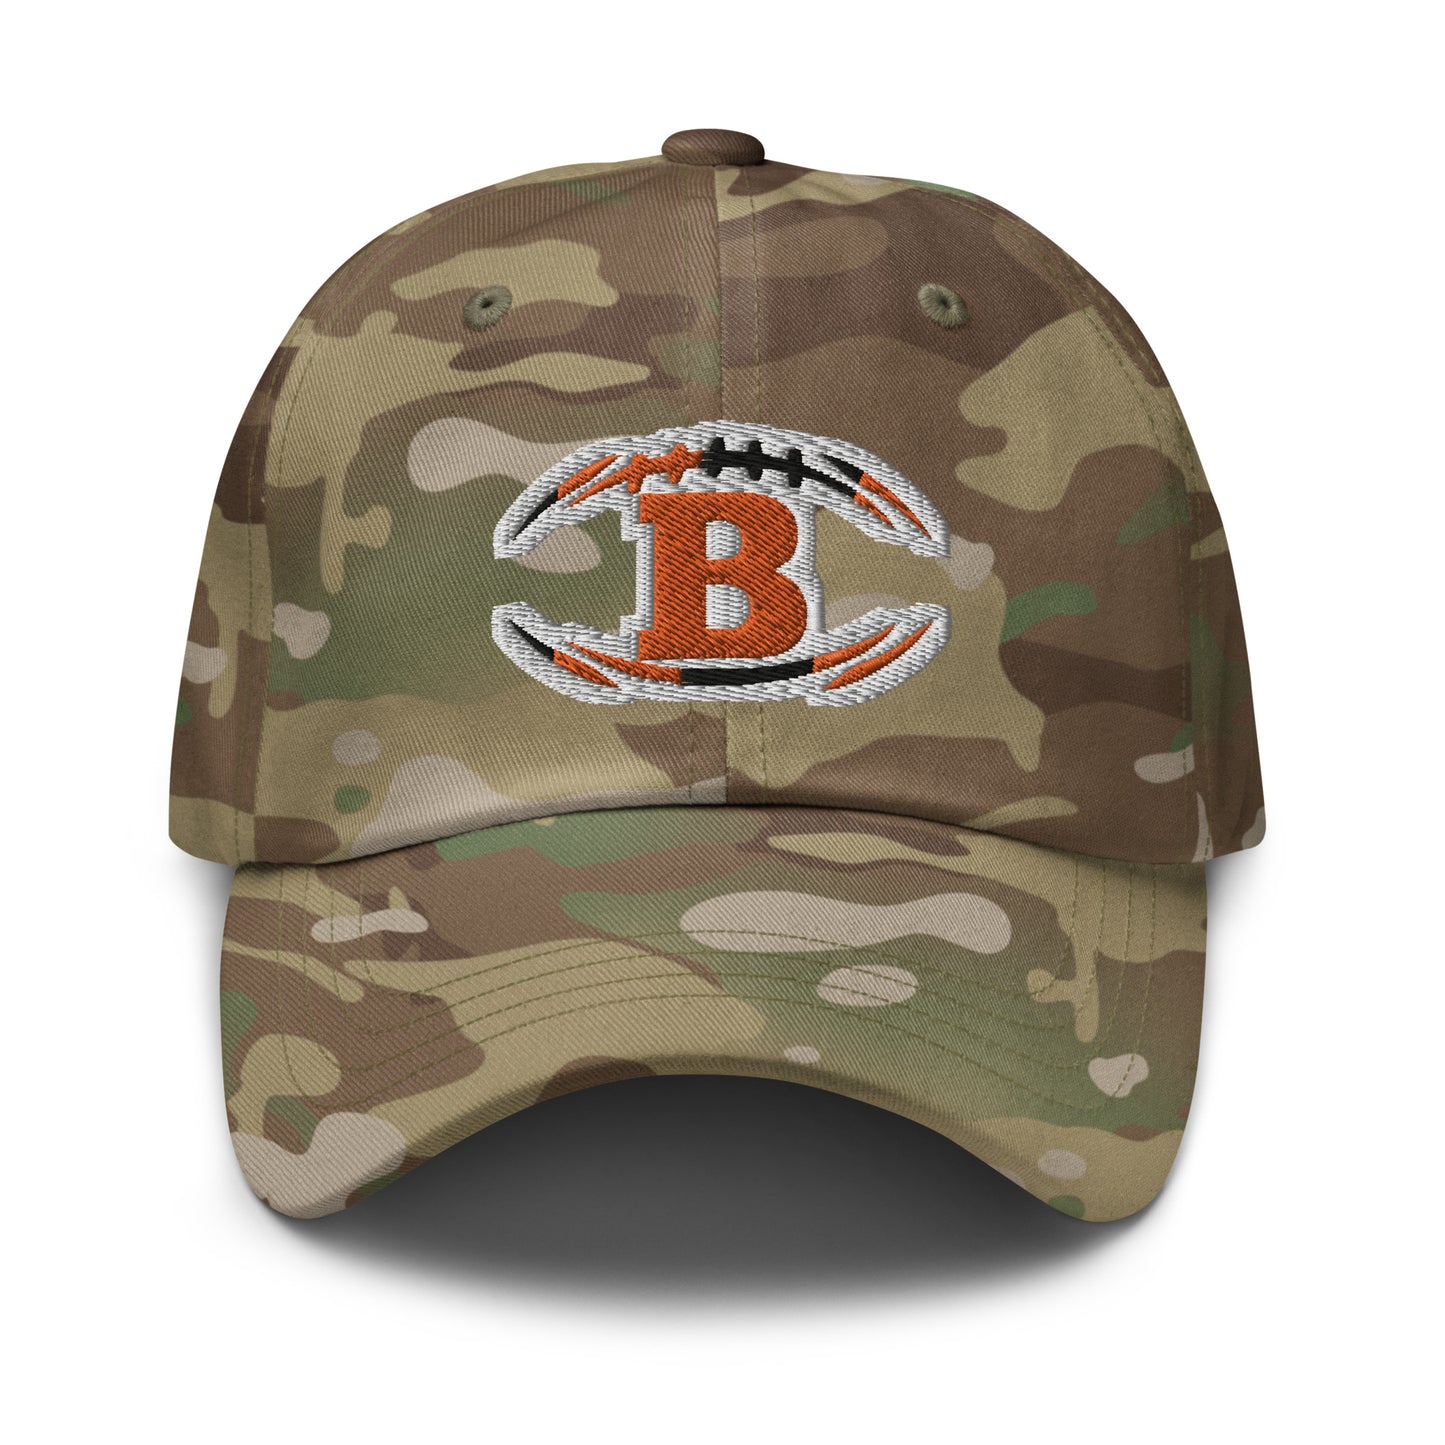 Bengals camo hat / B Hat / Bengals Champions Multicam dad hat